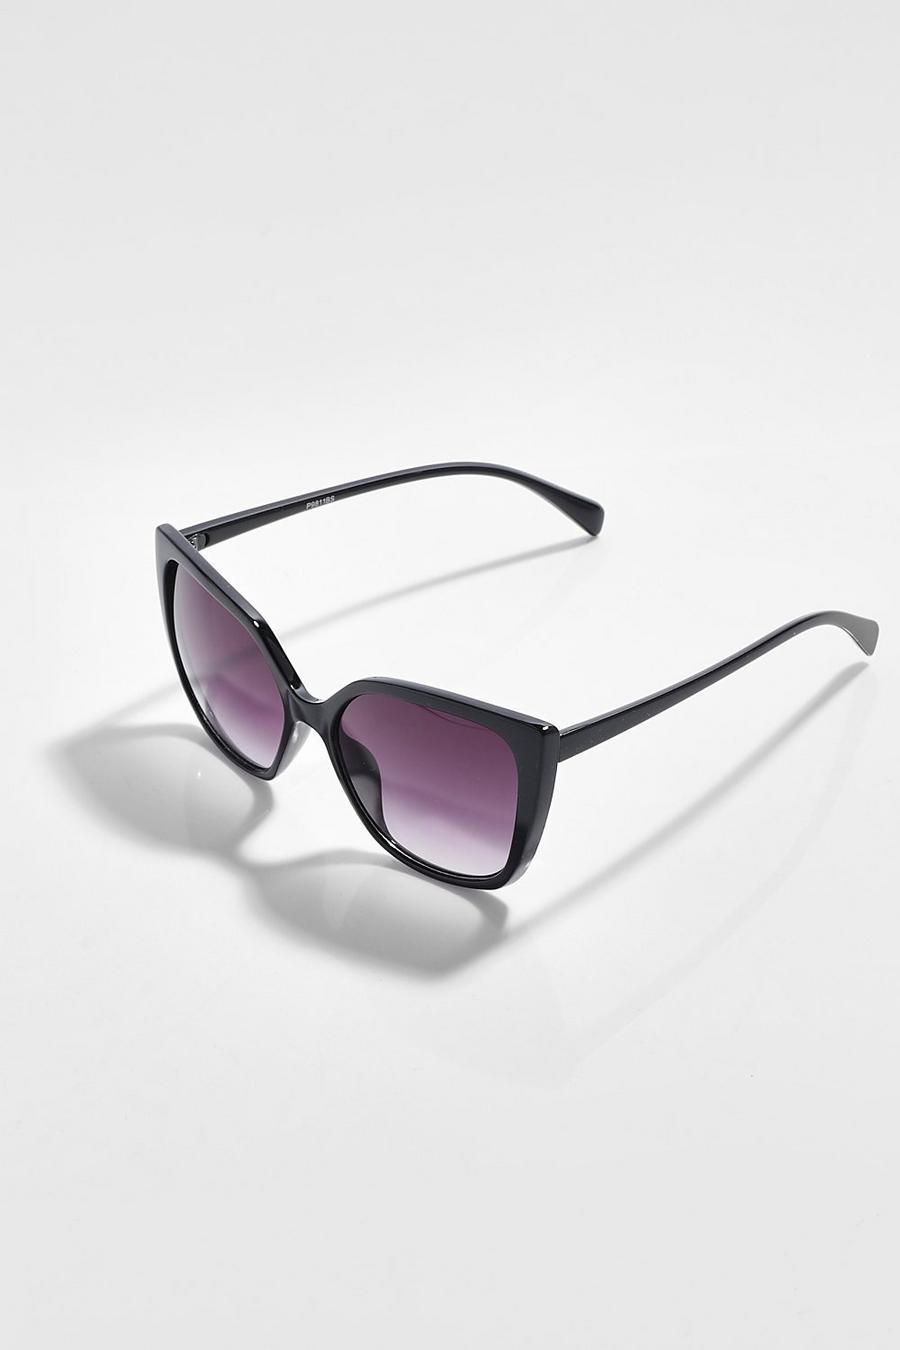 Gafas de sol oversize estilo ojo de gato con lentes inclinadas, Black nero